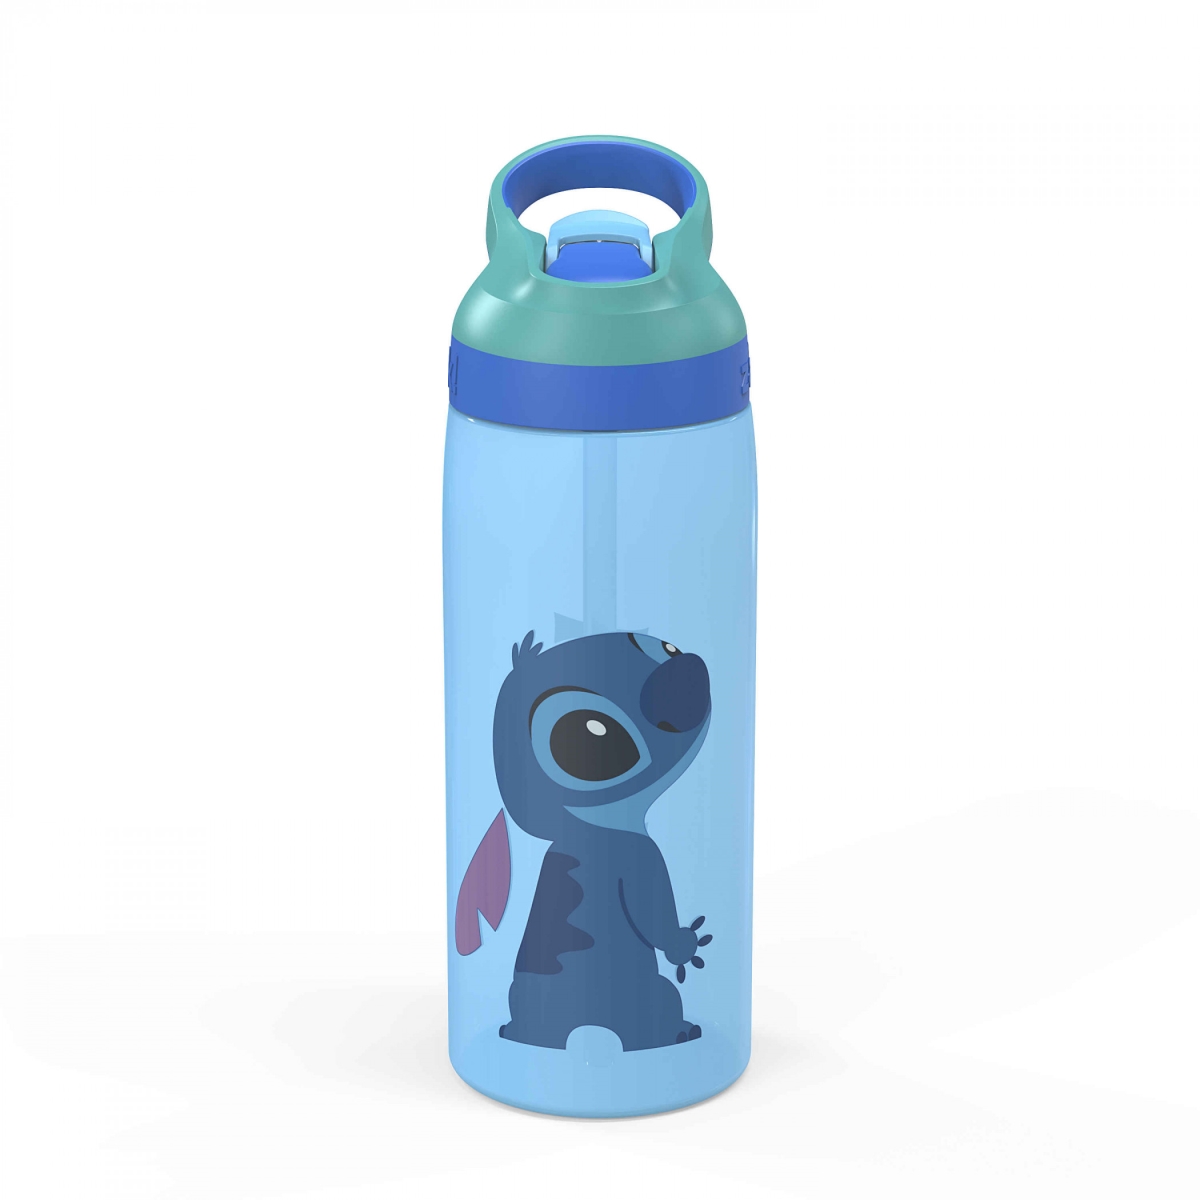 Picture of Lilo & Stitch 874977 25 oz Lilo & Stitch Peeking Over Reusable Plastic Water Bottle